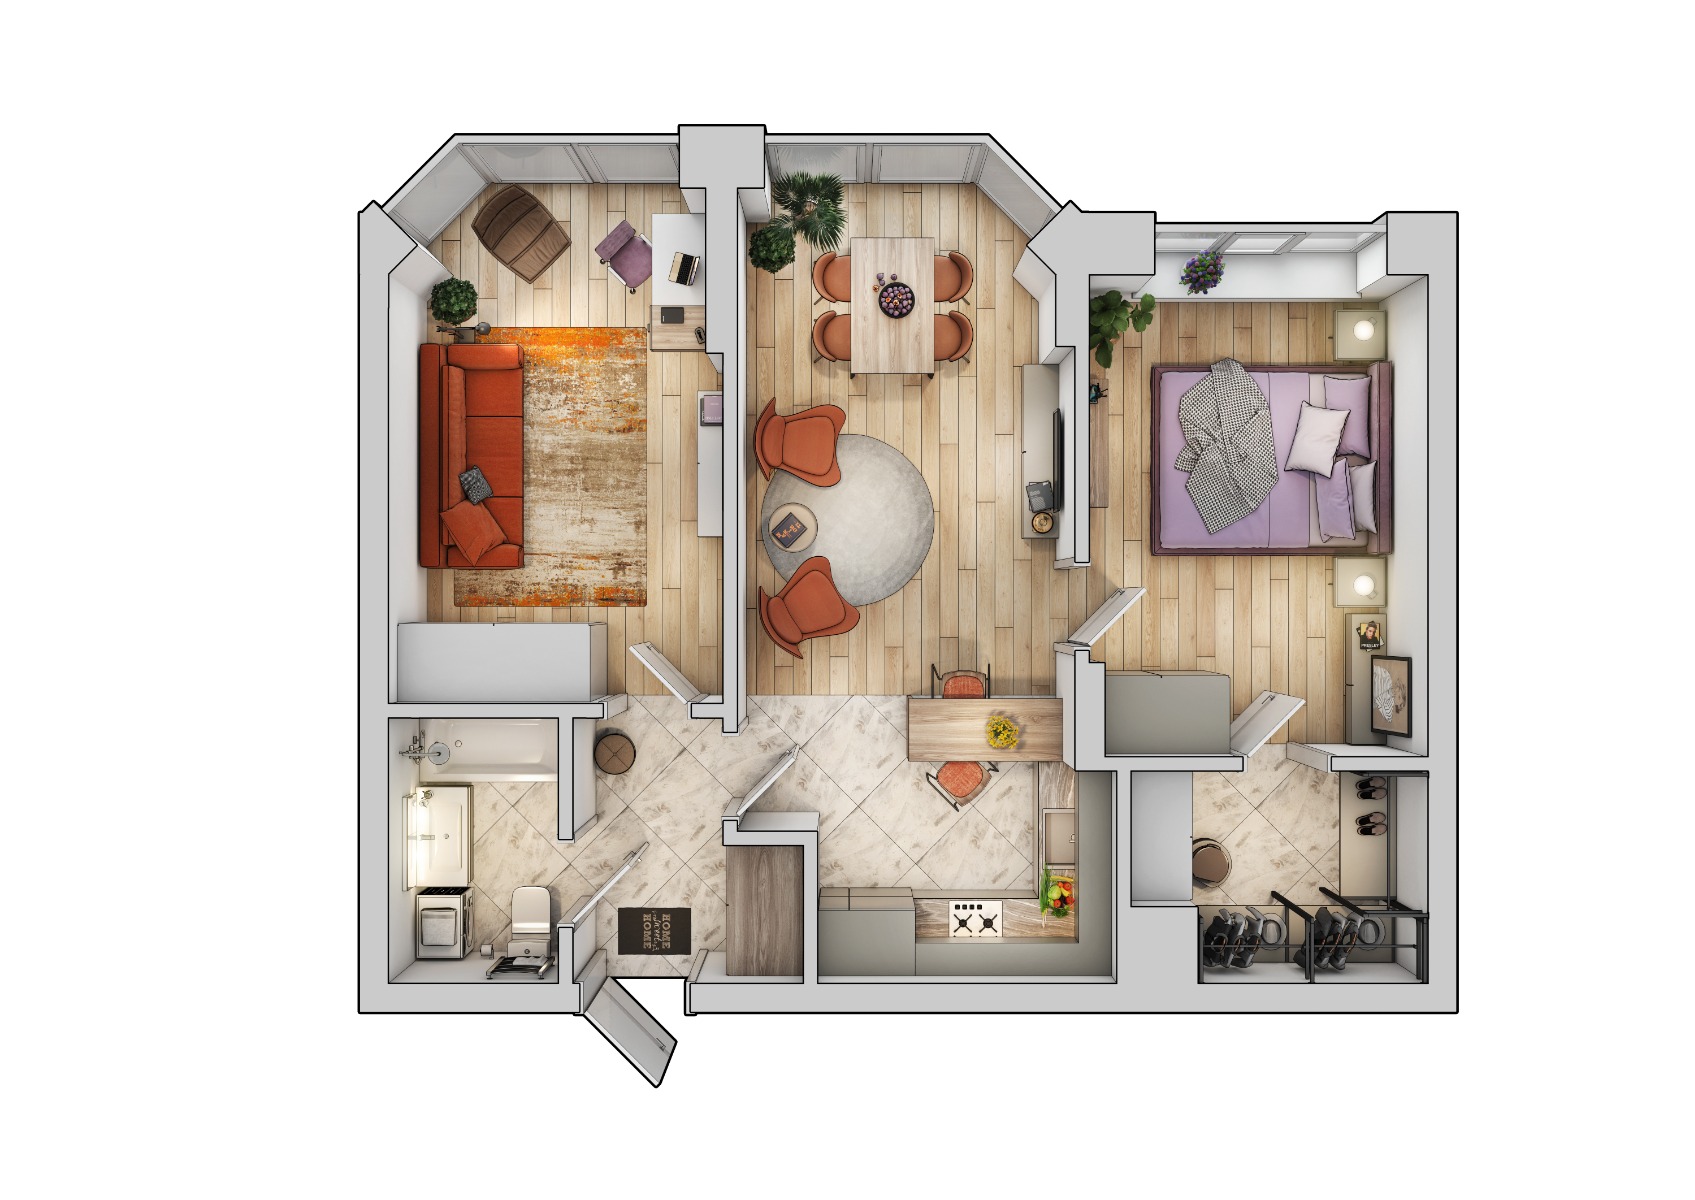 Overhead, 2D view of a home's interior through home design software